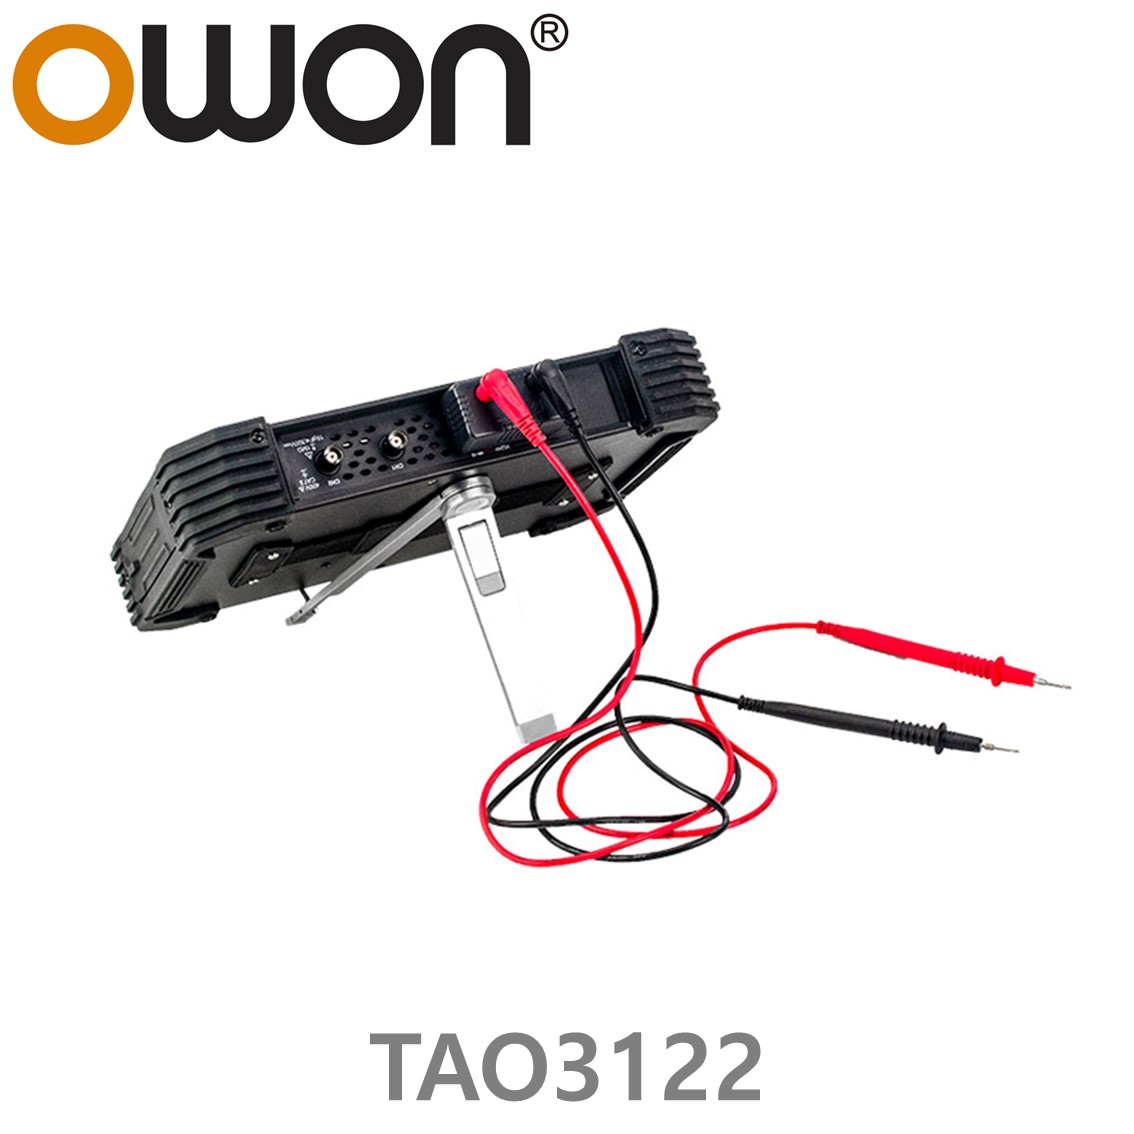 [ OWON ] TAO3122 태블릿 오실로스코프 120MHz, 2CH, 1GS/s, 8Bit